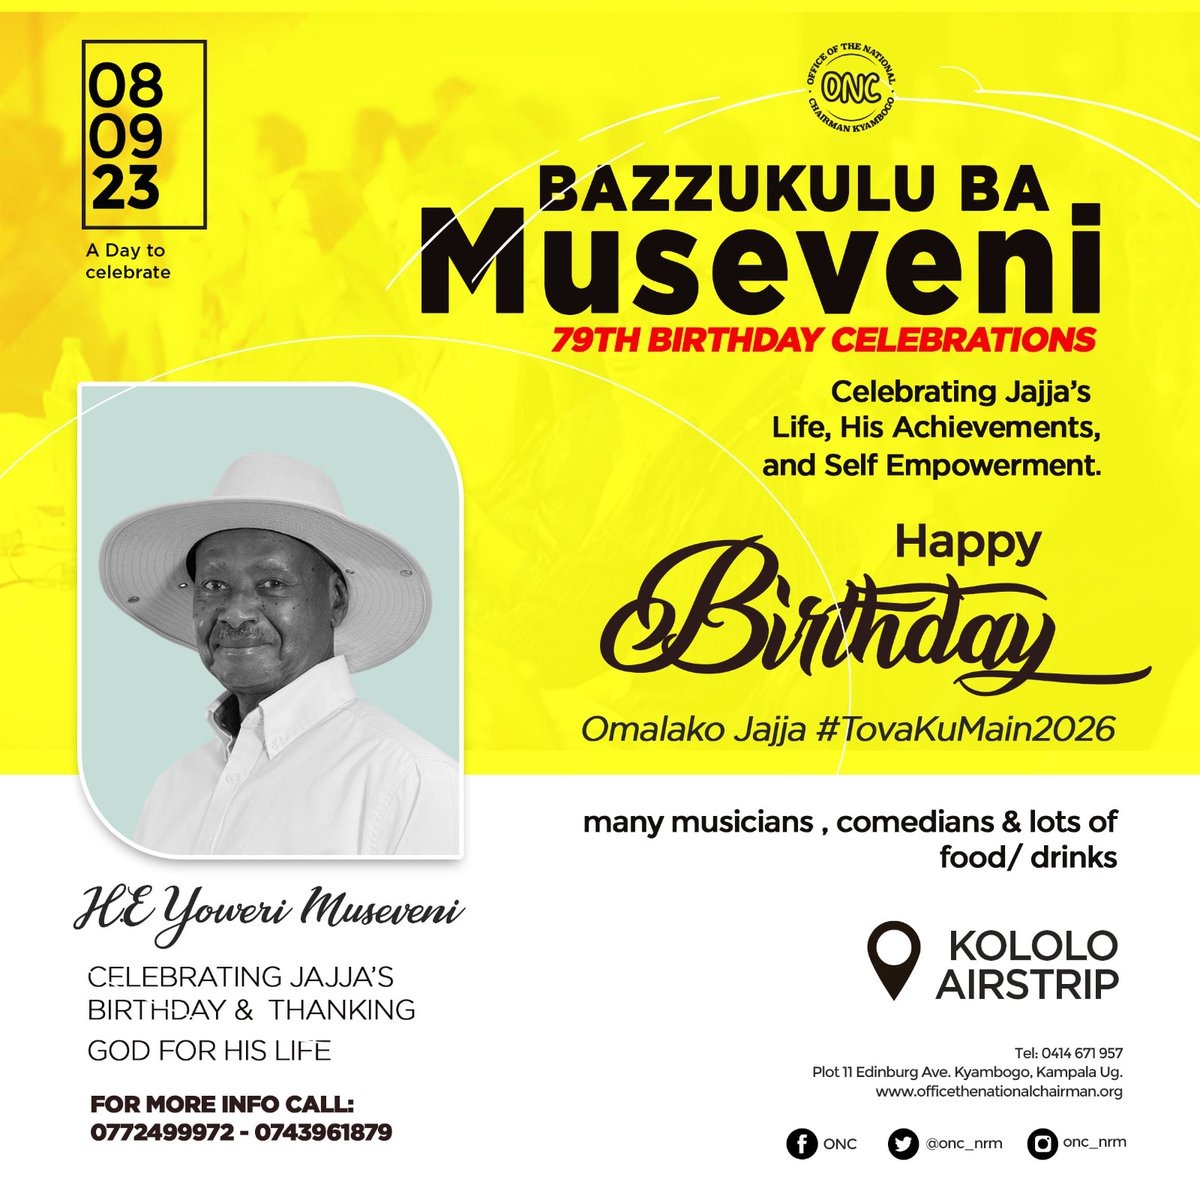 President Museveni's 79th Birthday